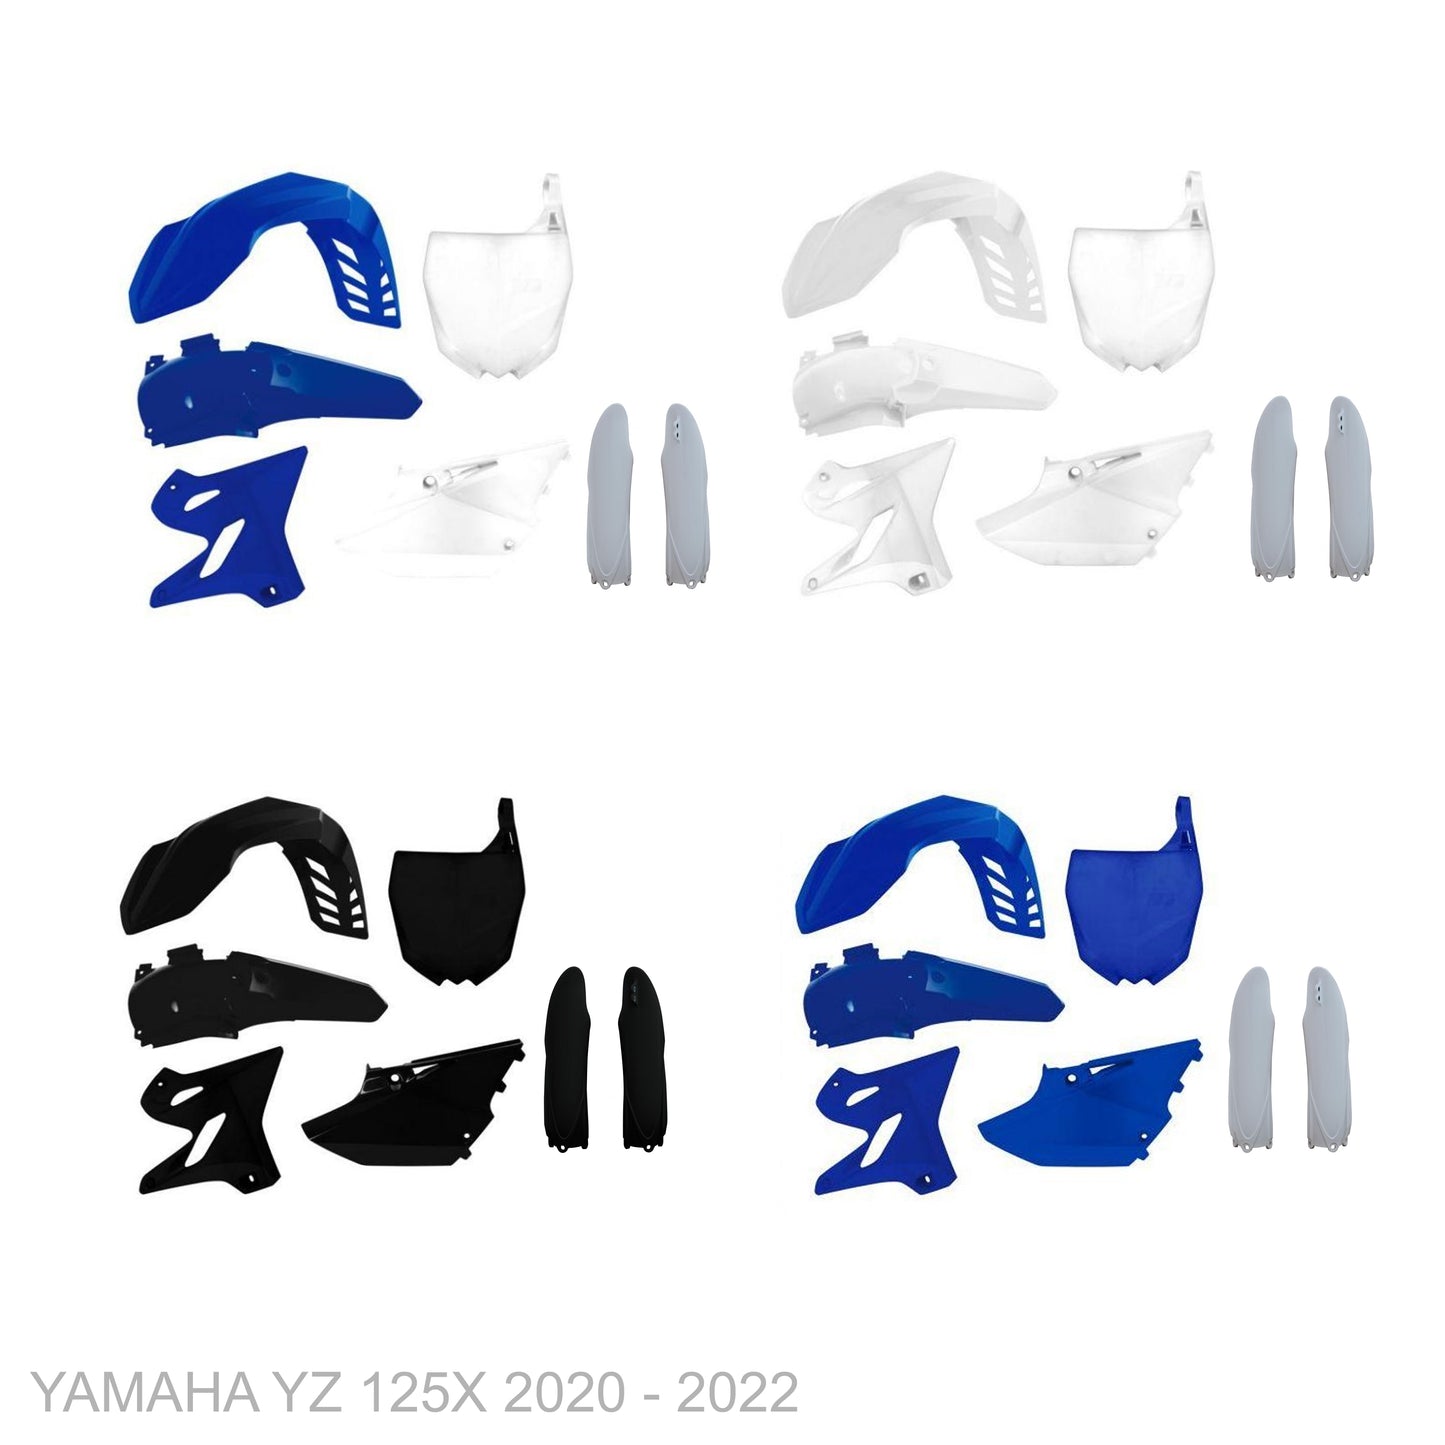 YAMAHA YZ 125X 2020 - 2022 Start From Scratch Graphics Kits